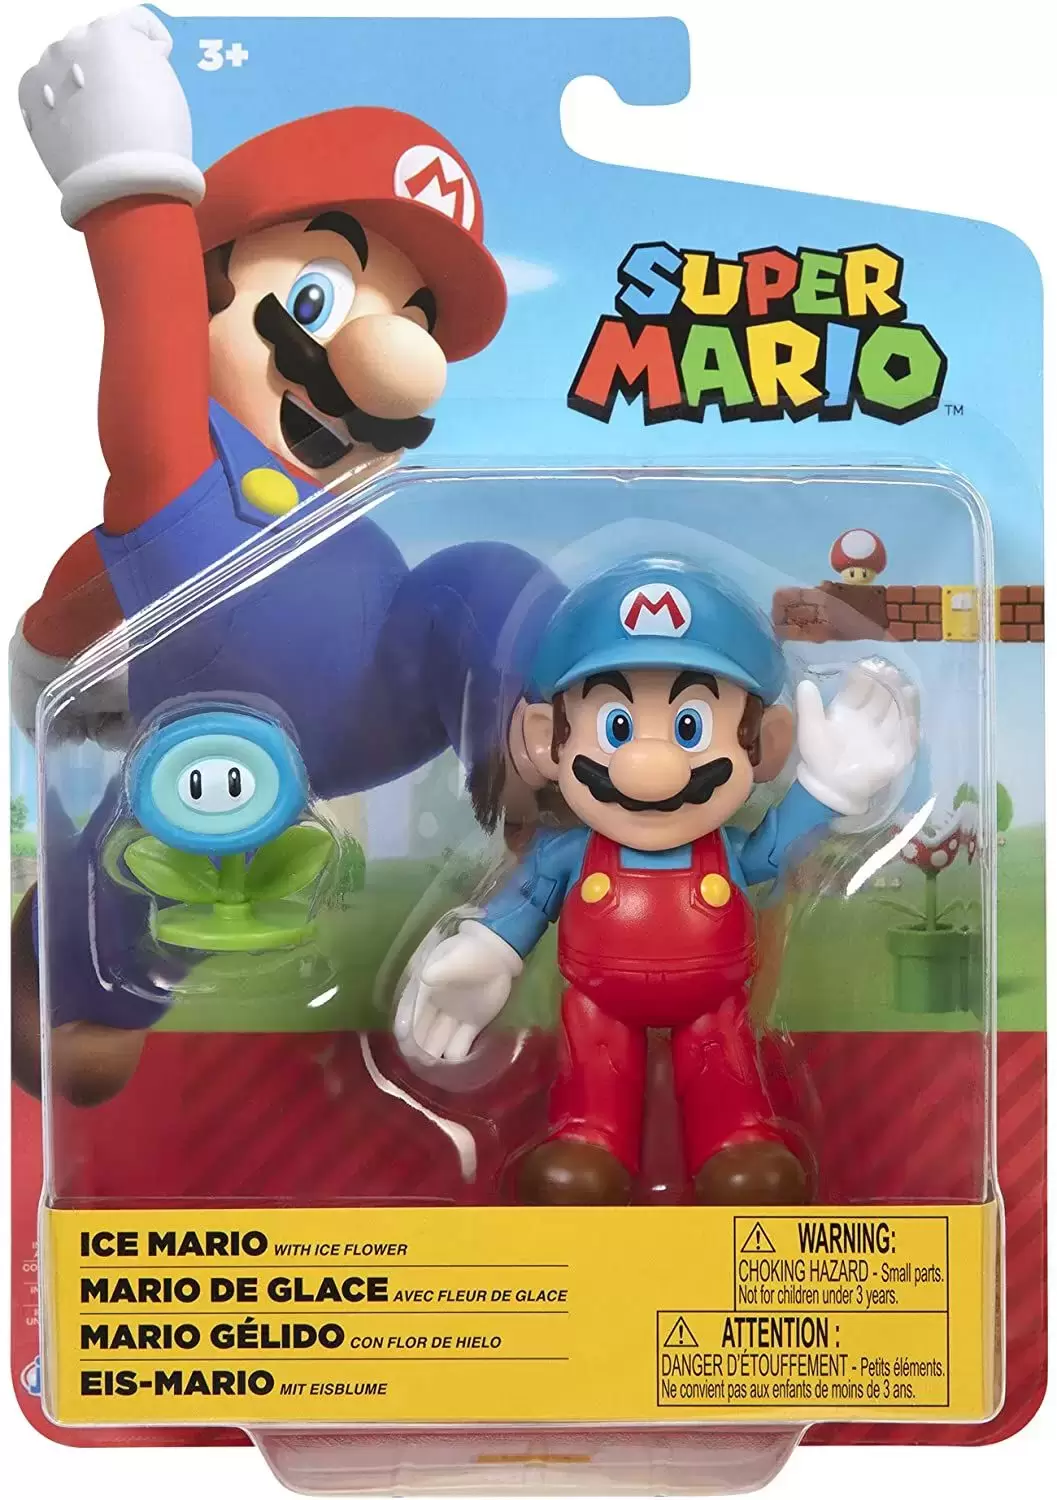 World of Nintendo - Ice Mario with Ice Flower